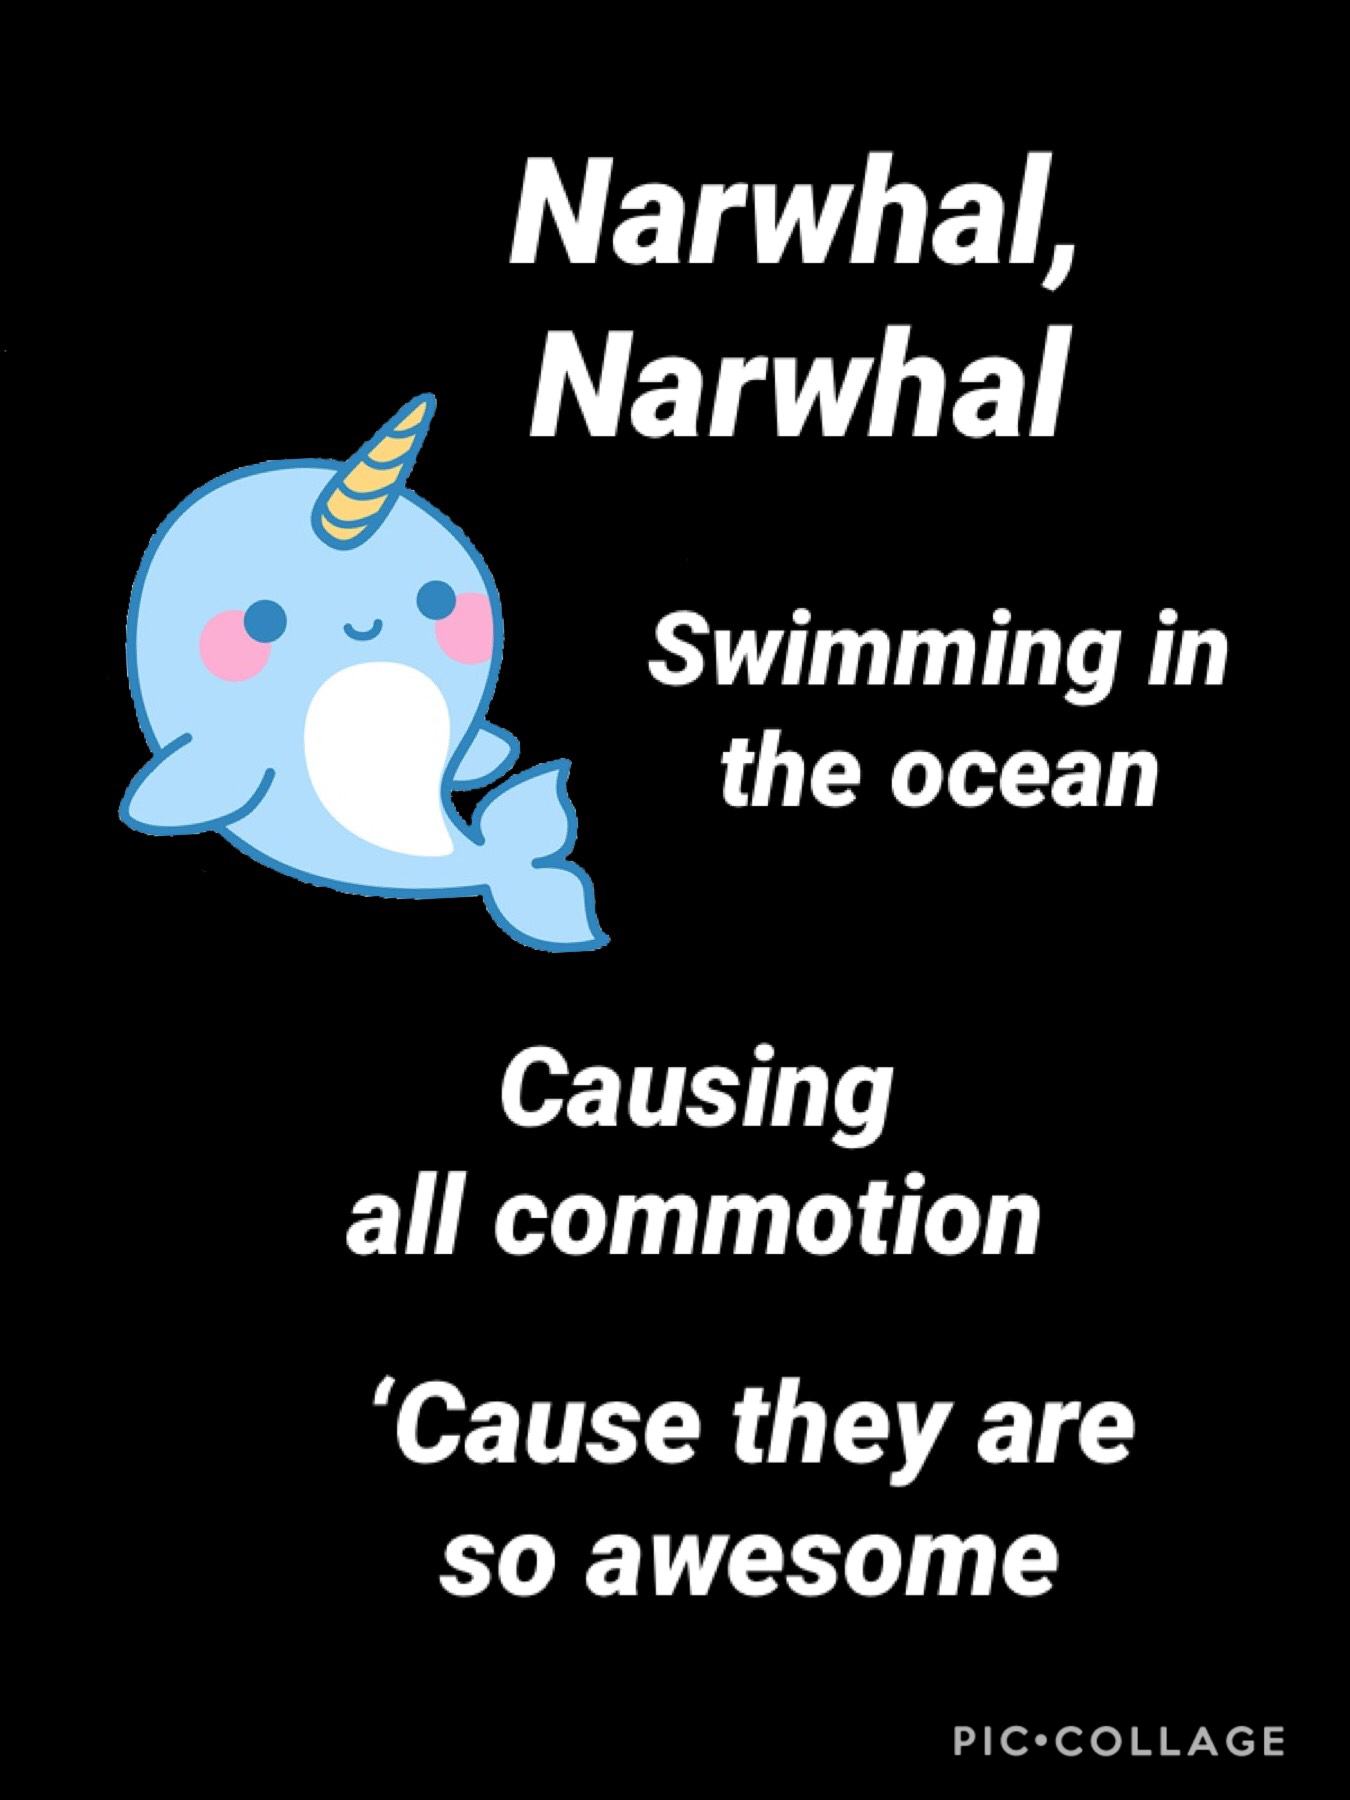 #Love ur narwhal